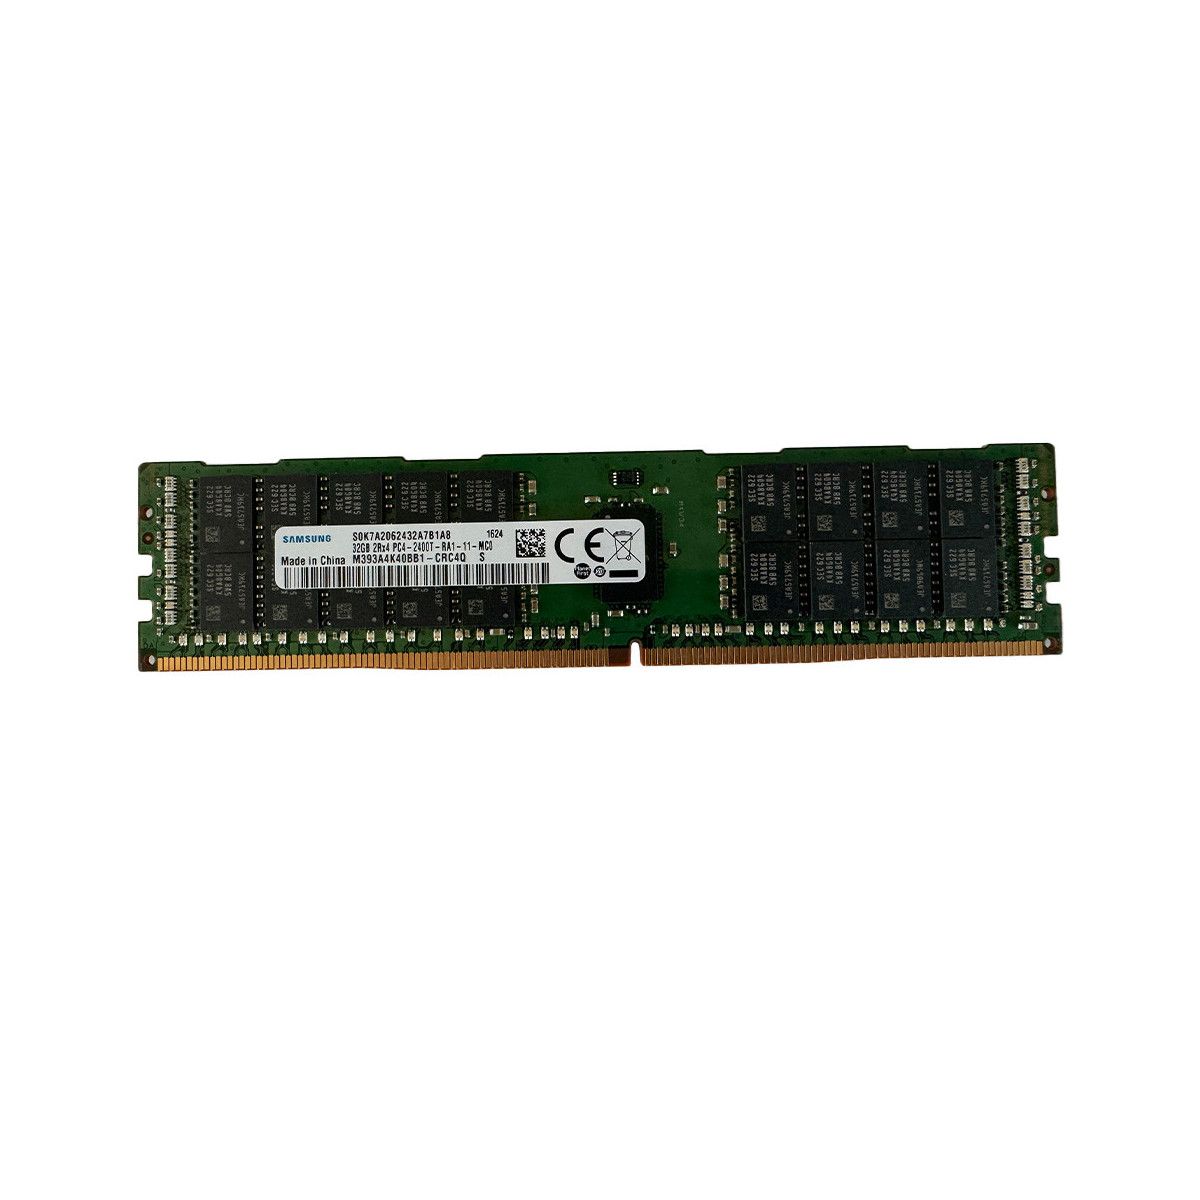 SNPCPC7GC/32G-MS - Memstar 1x 32GB DDR4-2400 RDIMM PC4-19200T-R - Mem-Star Compatible OEM Memoria 1 - Memstar 